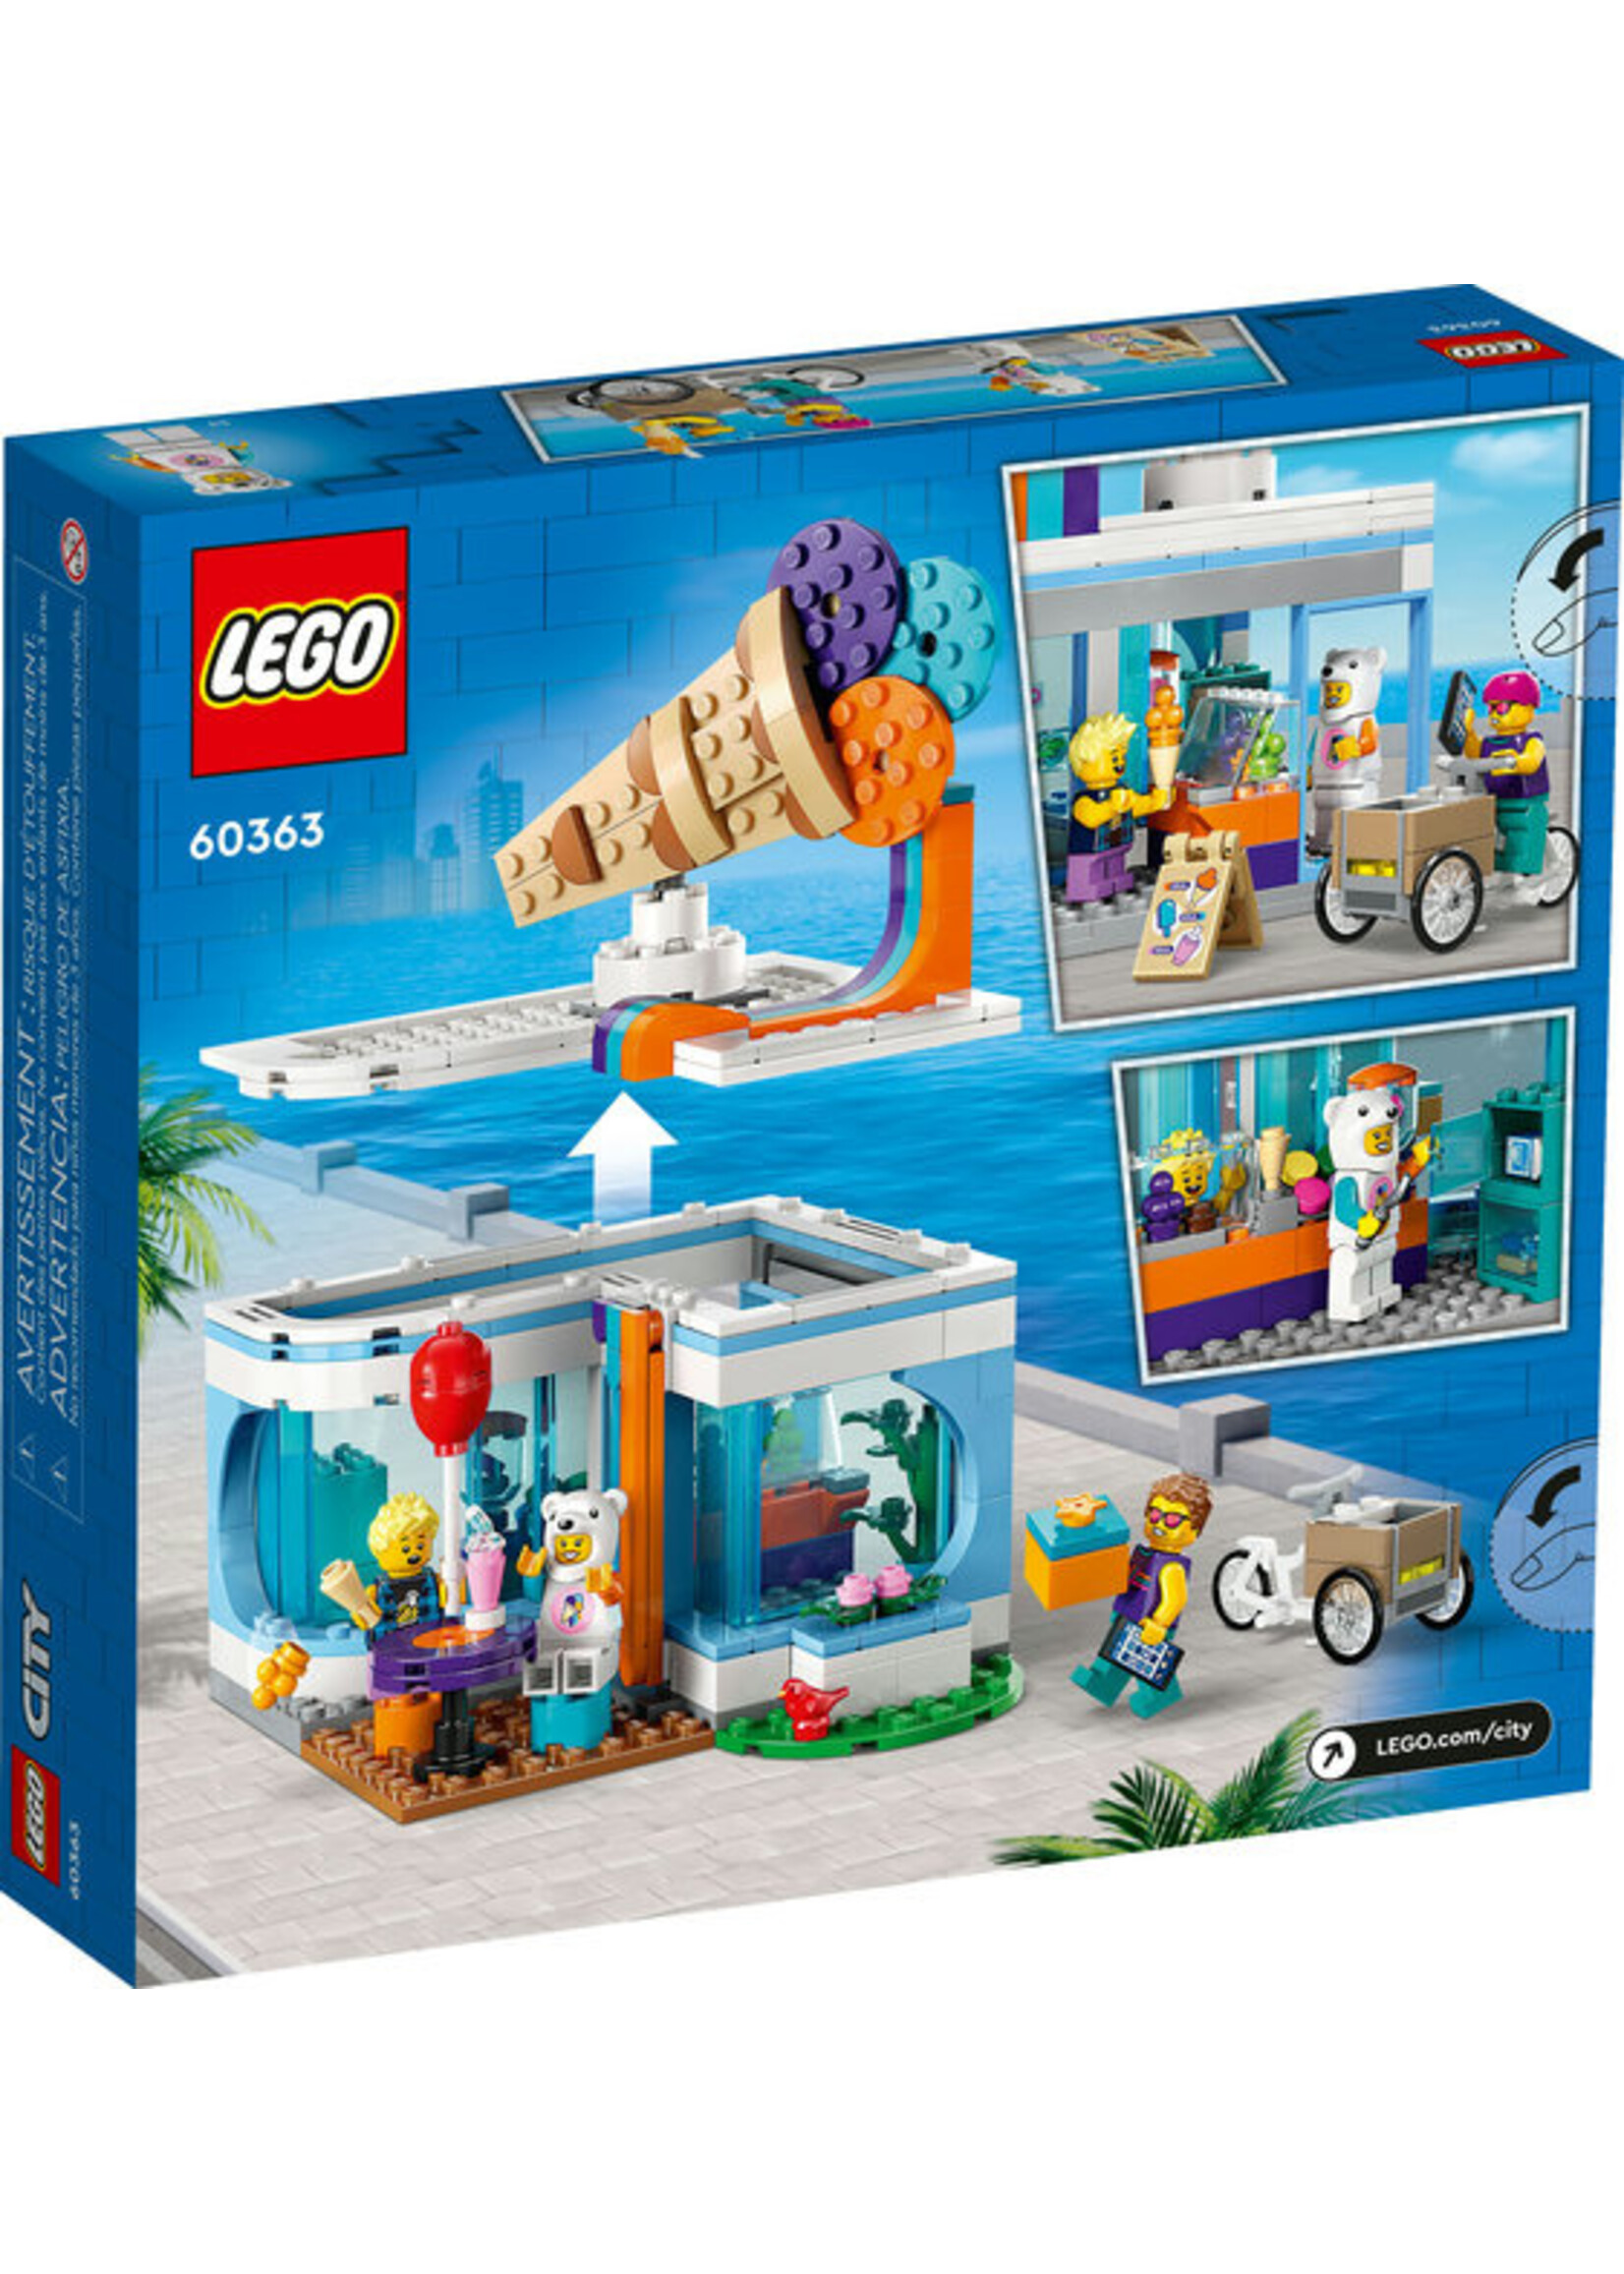 LEGO 60363 - Ice Cream Shop